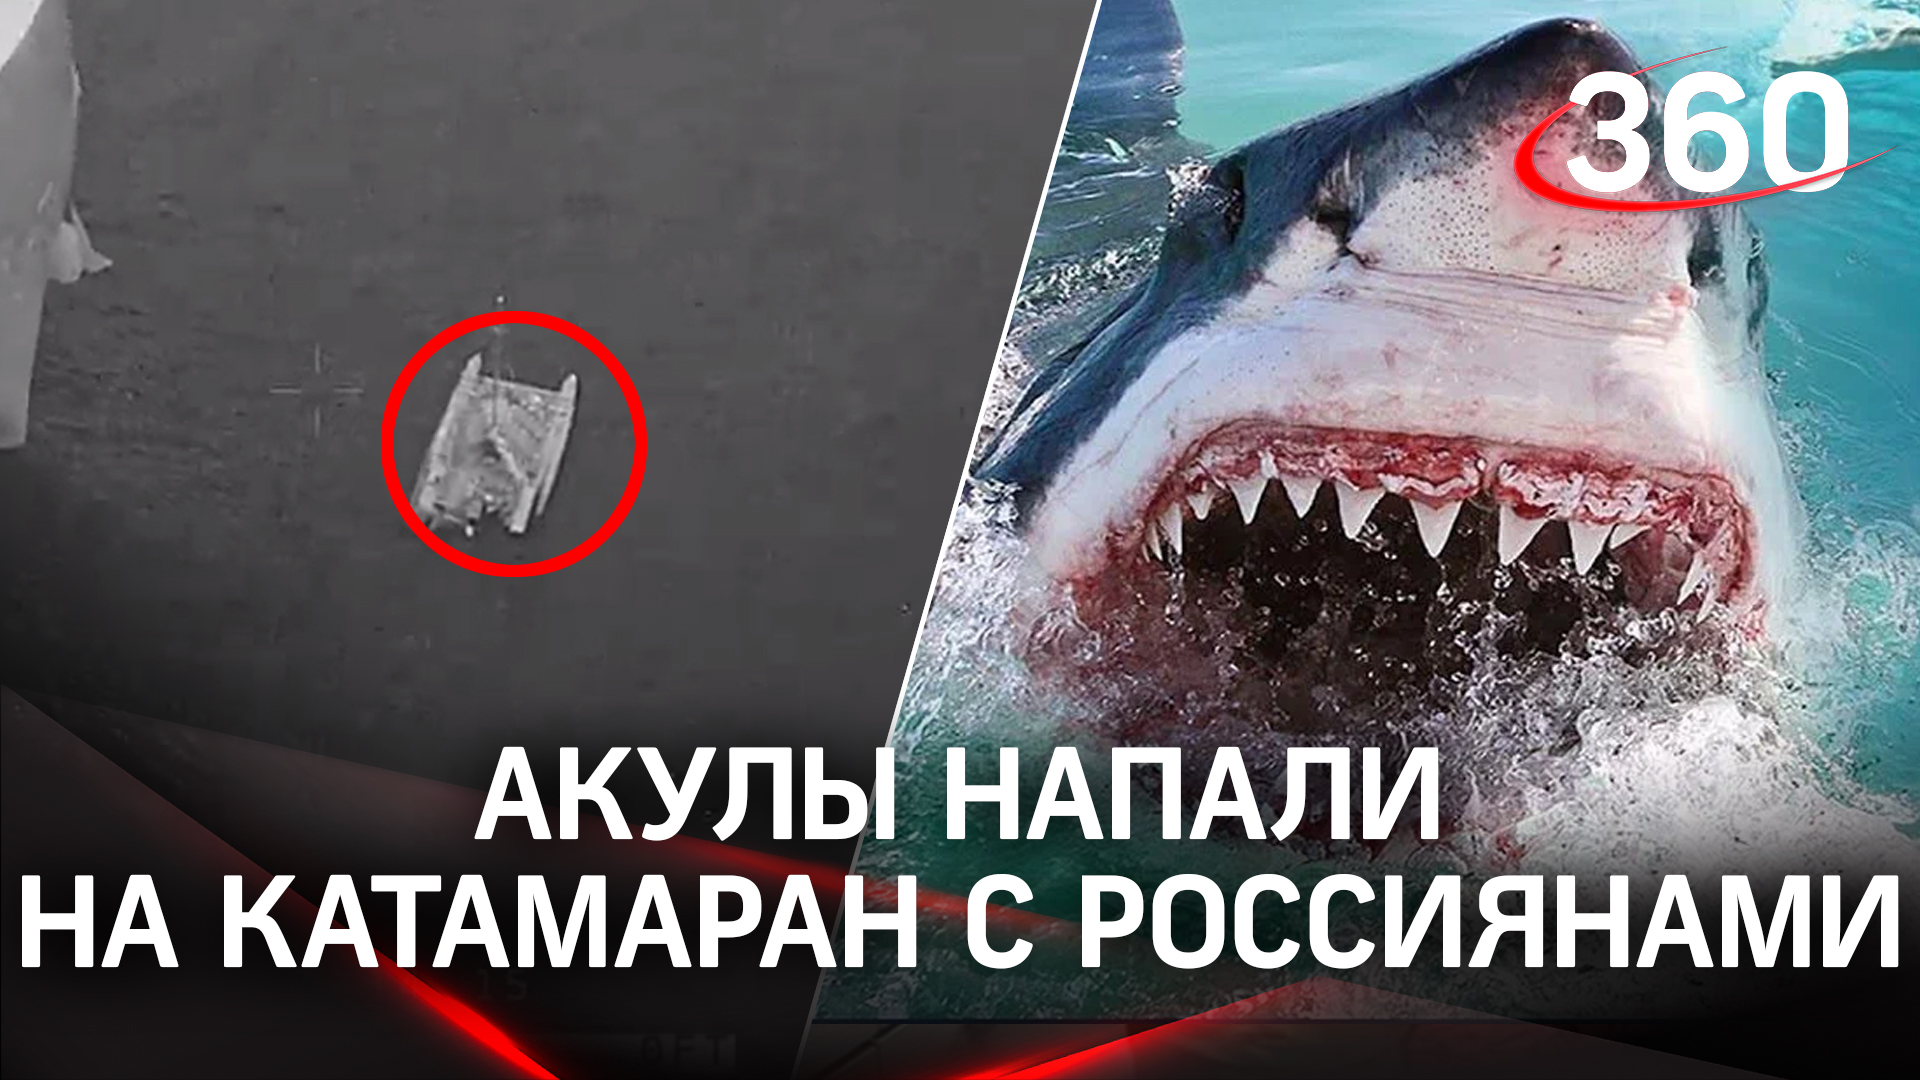 Акулы атаковали катамаран кругосветной экспедиции Russian Ocean Way